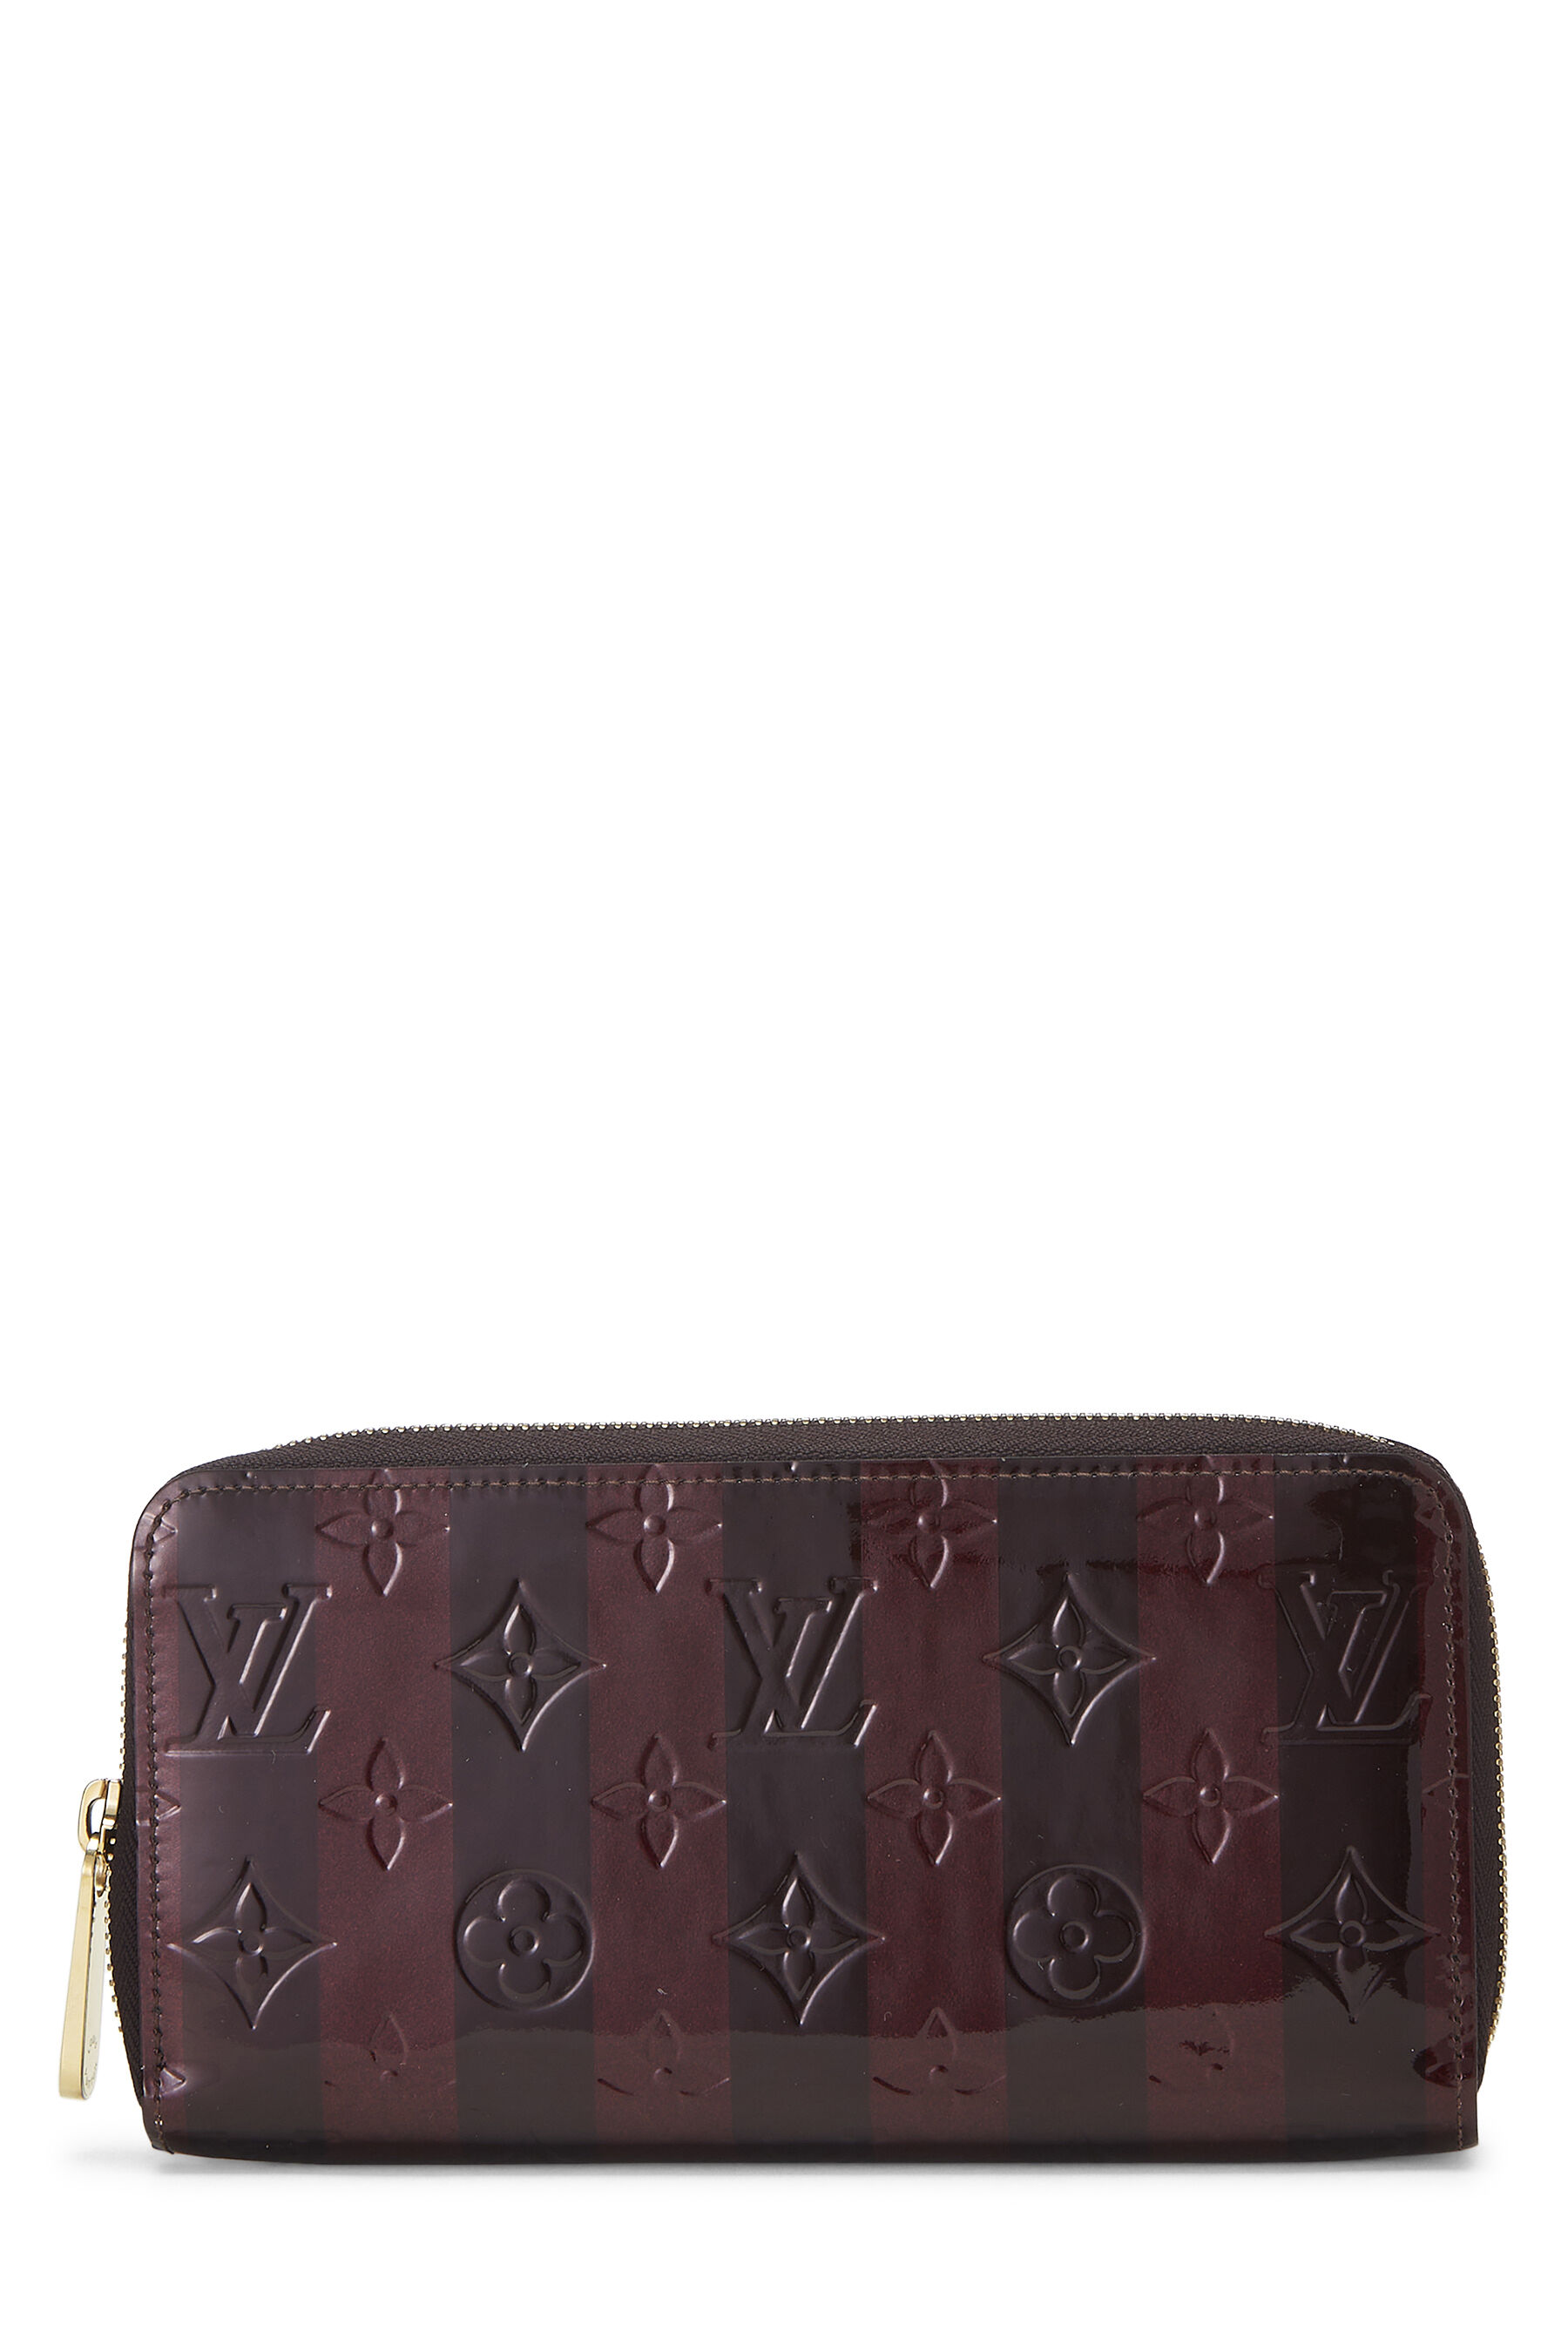 Louis Vuitton Wallet Zippy Vernis Monogram Amarante Leather W